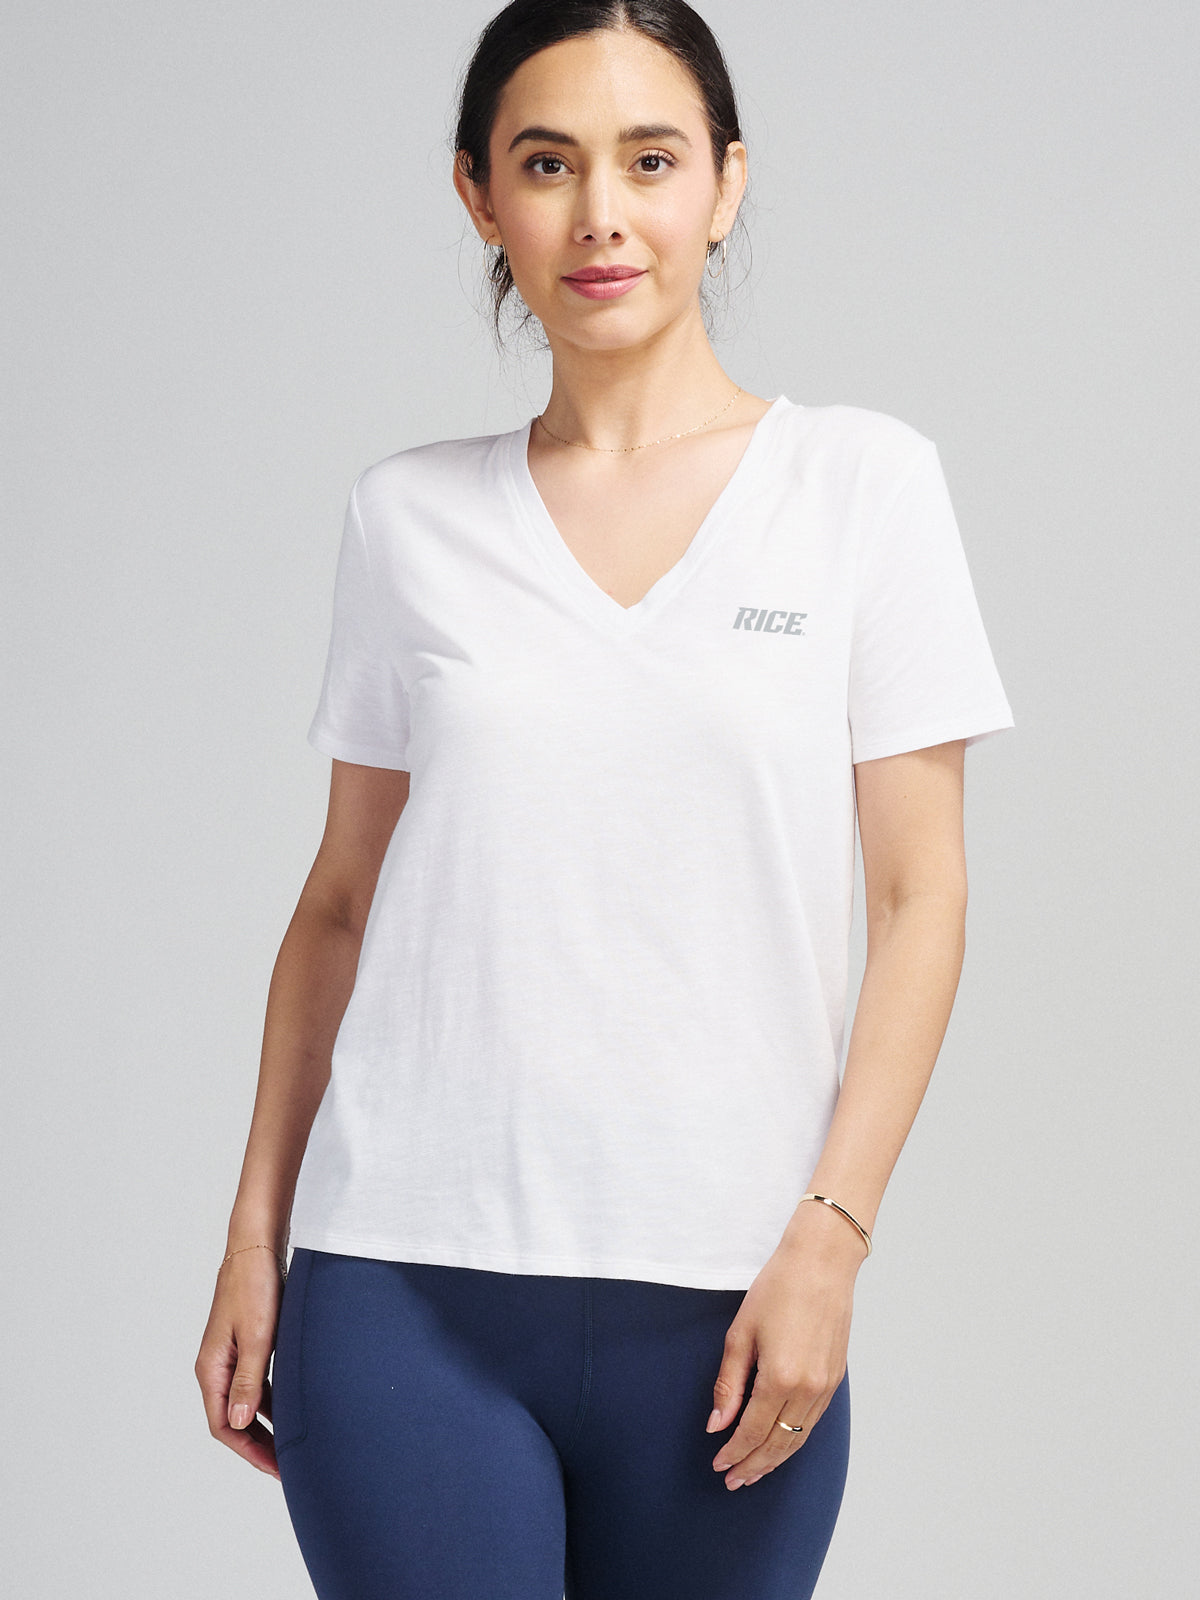 NOLA V-Neck T-Shirt - Rice University - tasc Performance (White)